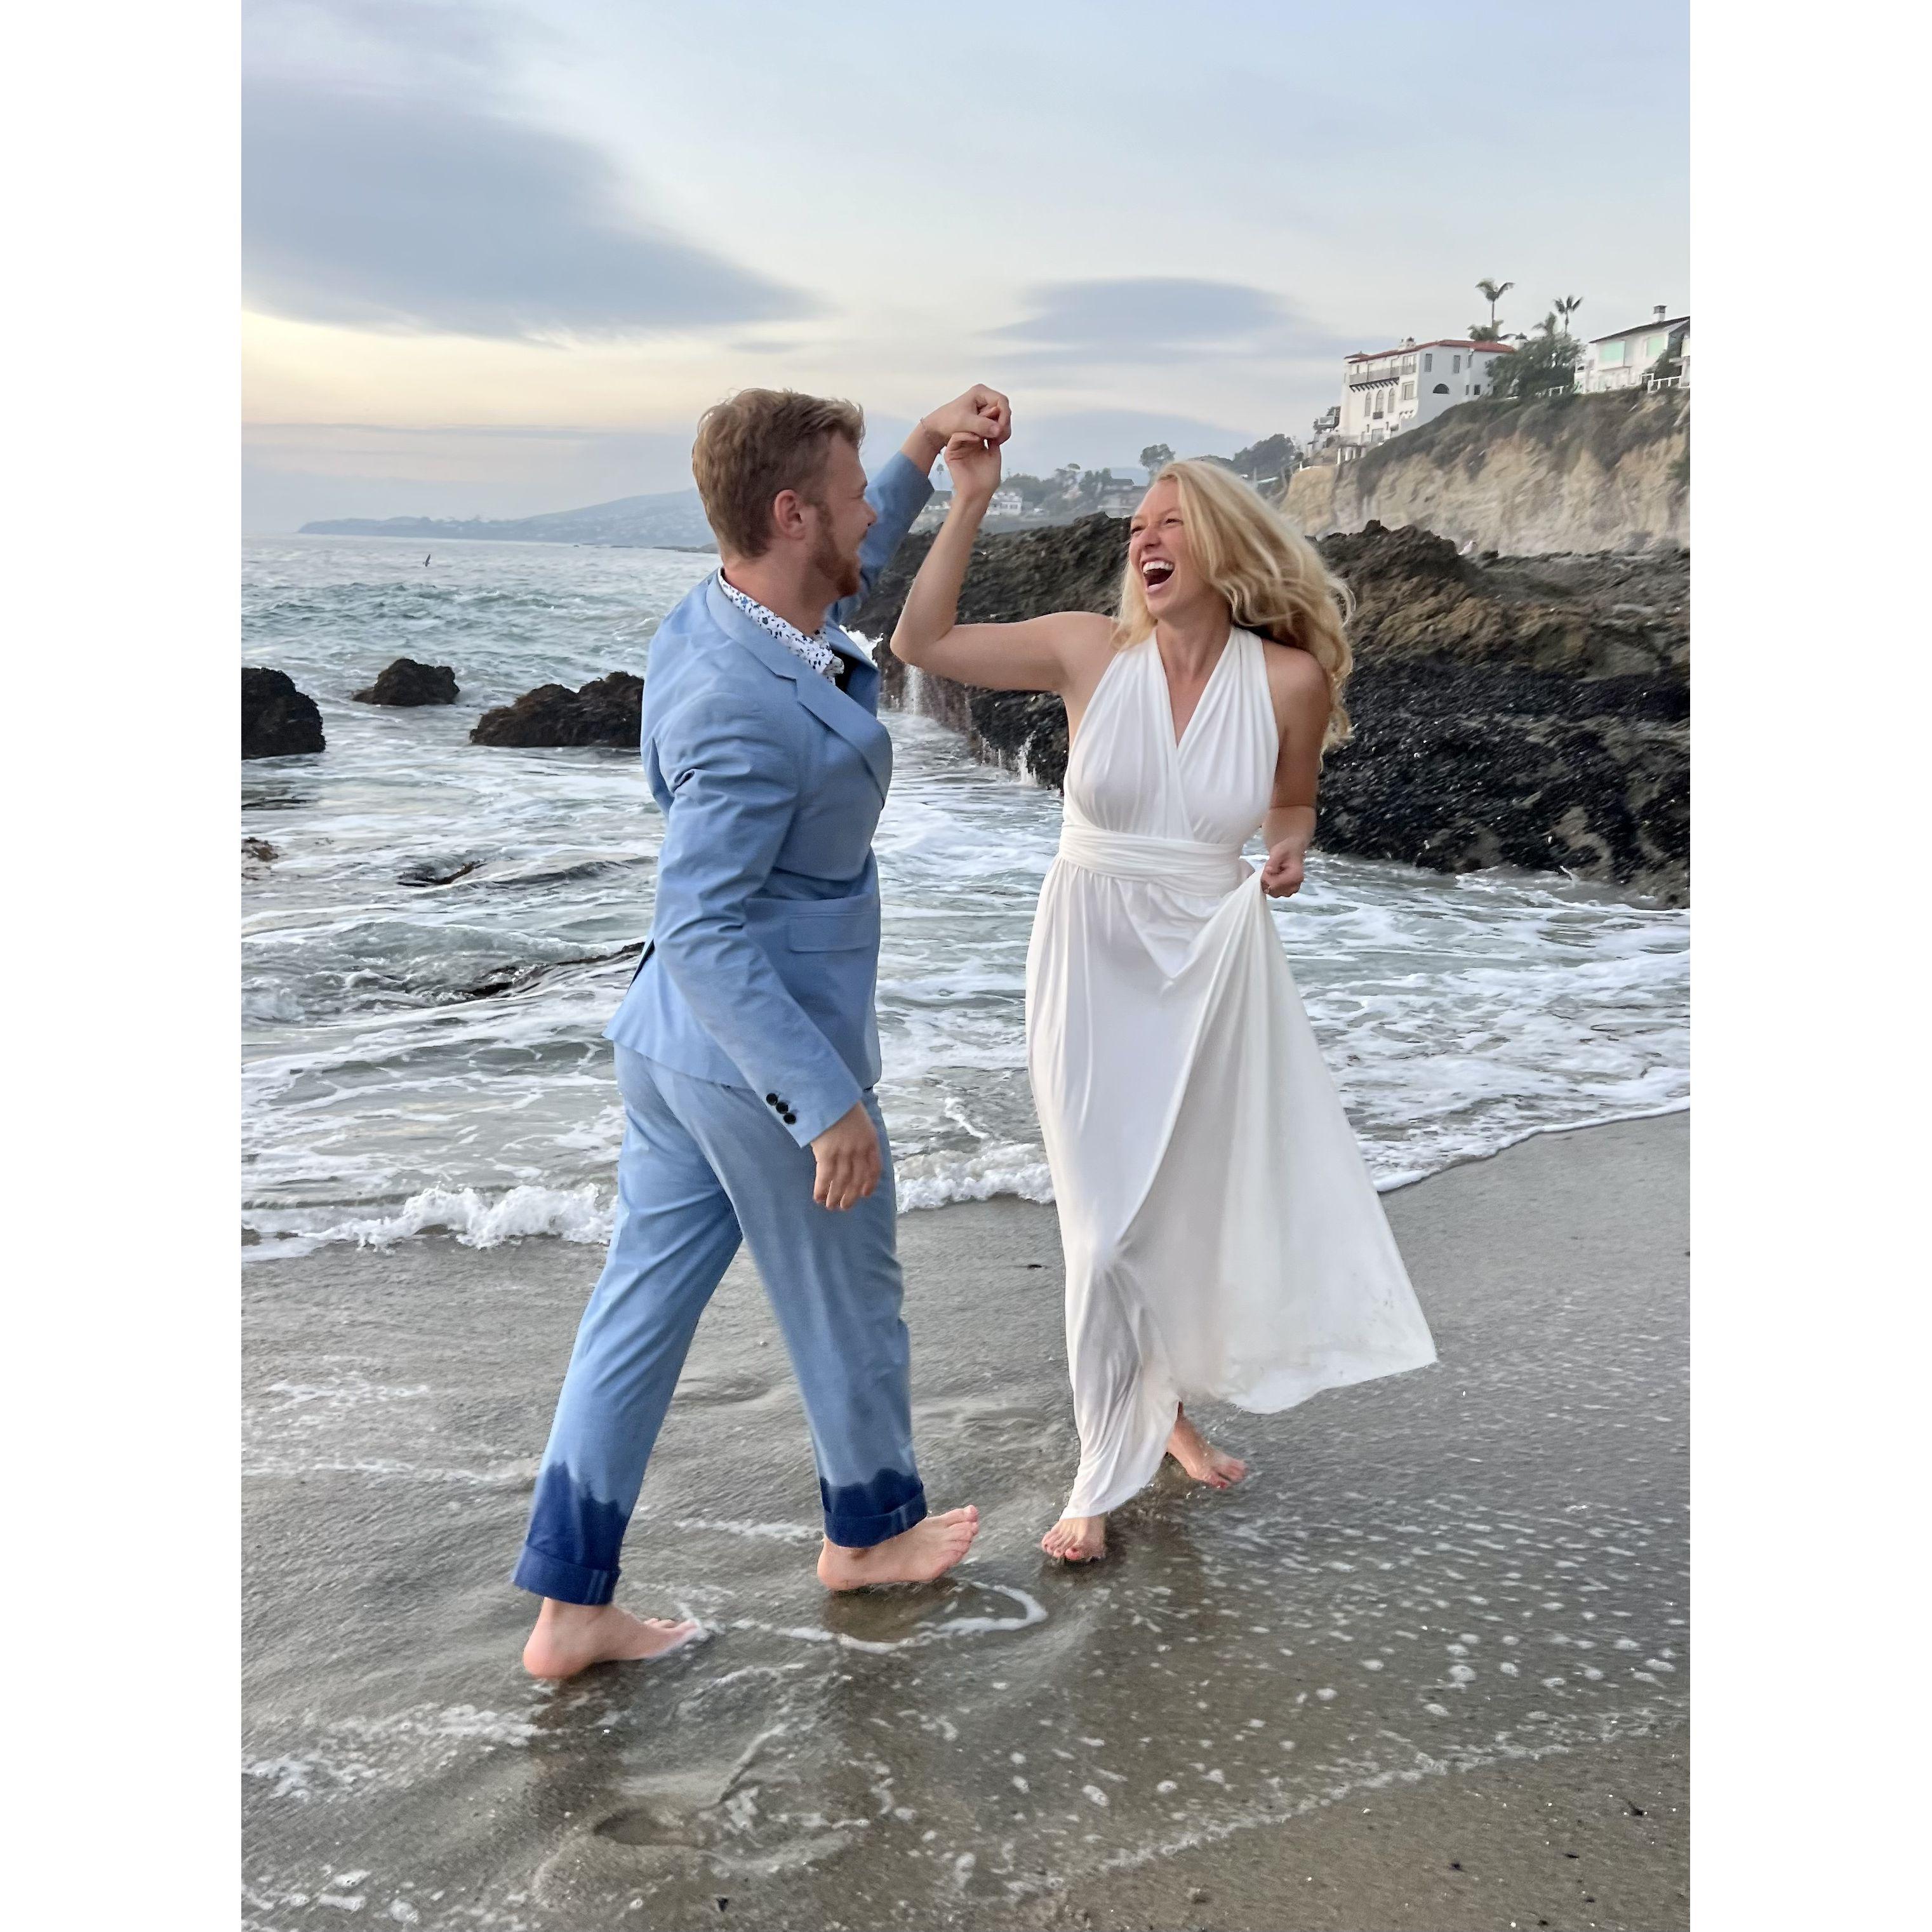 Dancing on the beach in Laguna Beach, CA